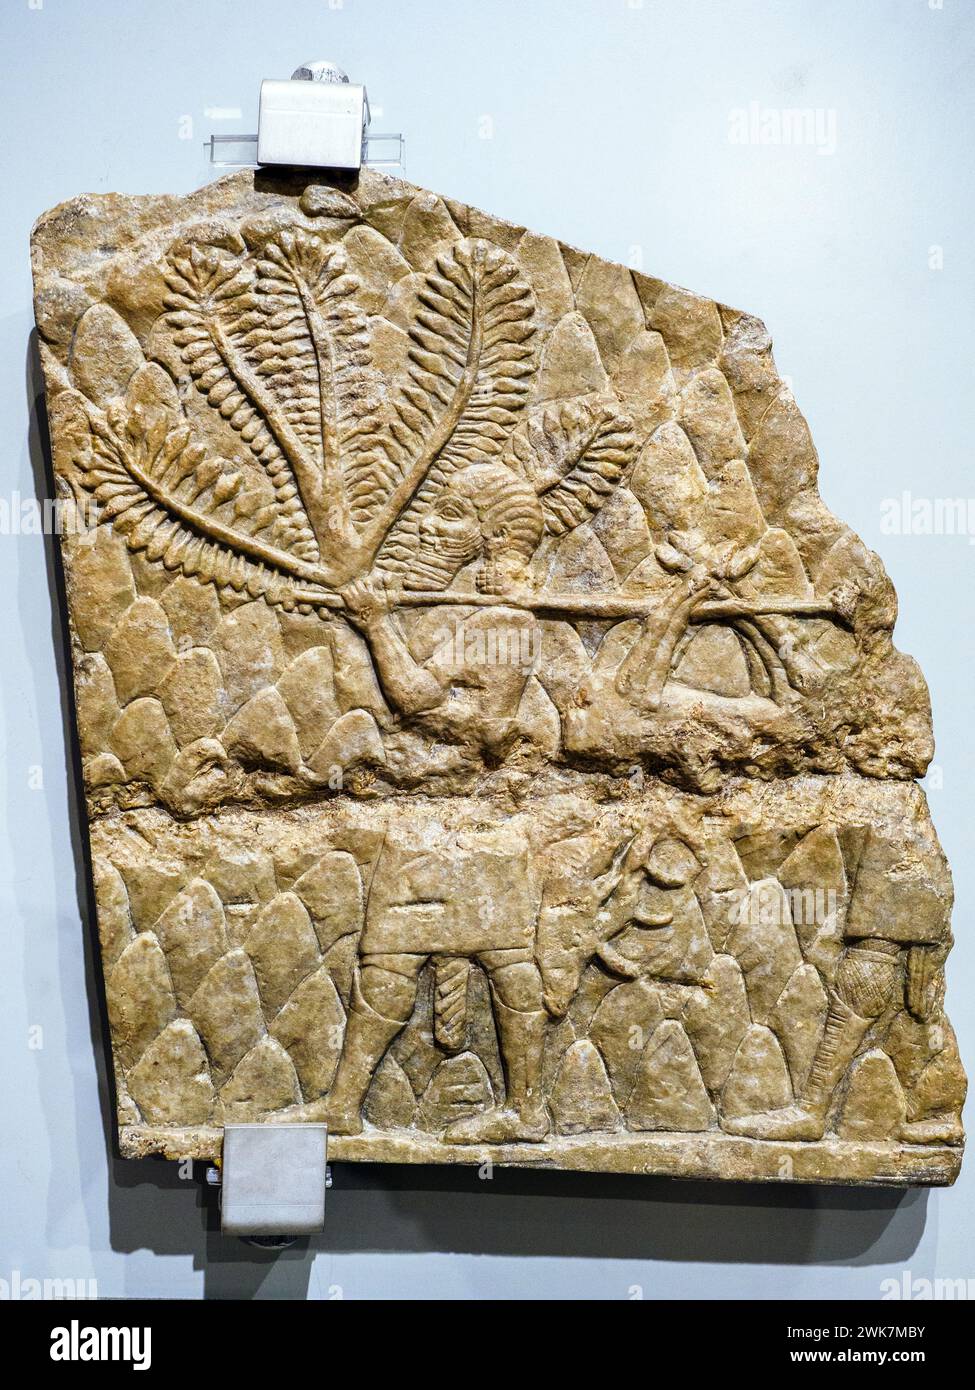 La mort de la chasse - Empire néo-assiryen, règne d'Assurbanipal (668 - 627 av. J.-C.) - calcaire - du nord de la Mésopotamie, Ninive (Kuyunjik), palais du Nord - Museo di Scultura Antica Giovanni Barracco, Rome, Italie Banque D'Images